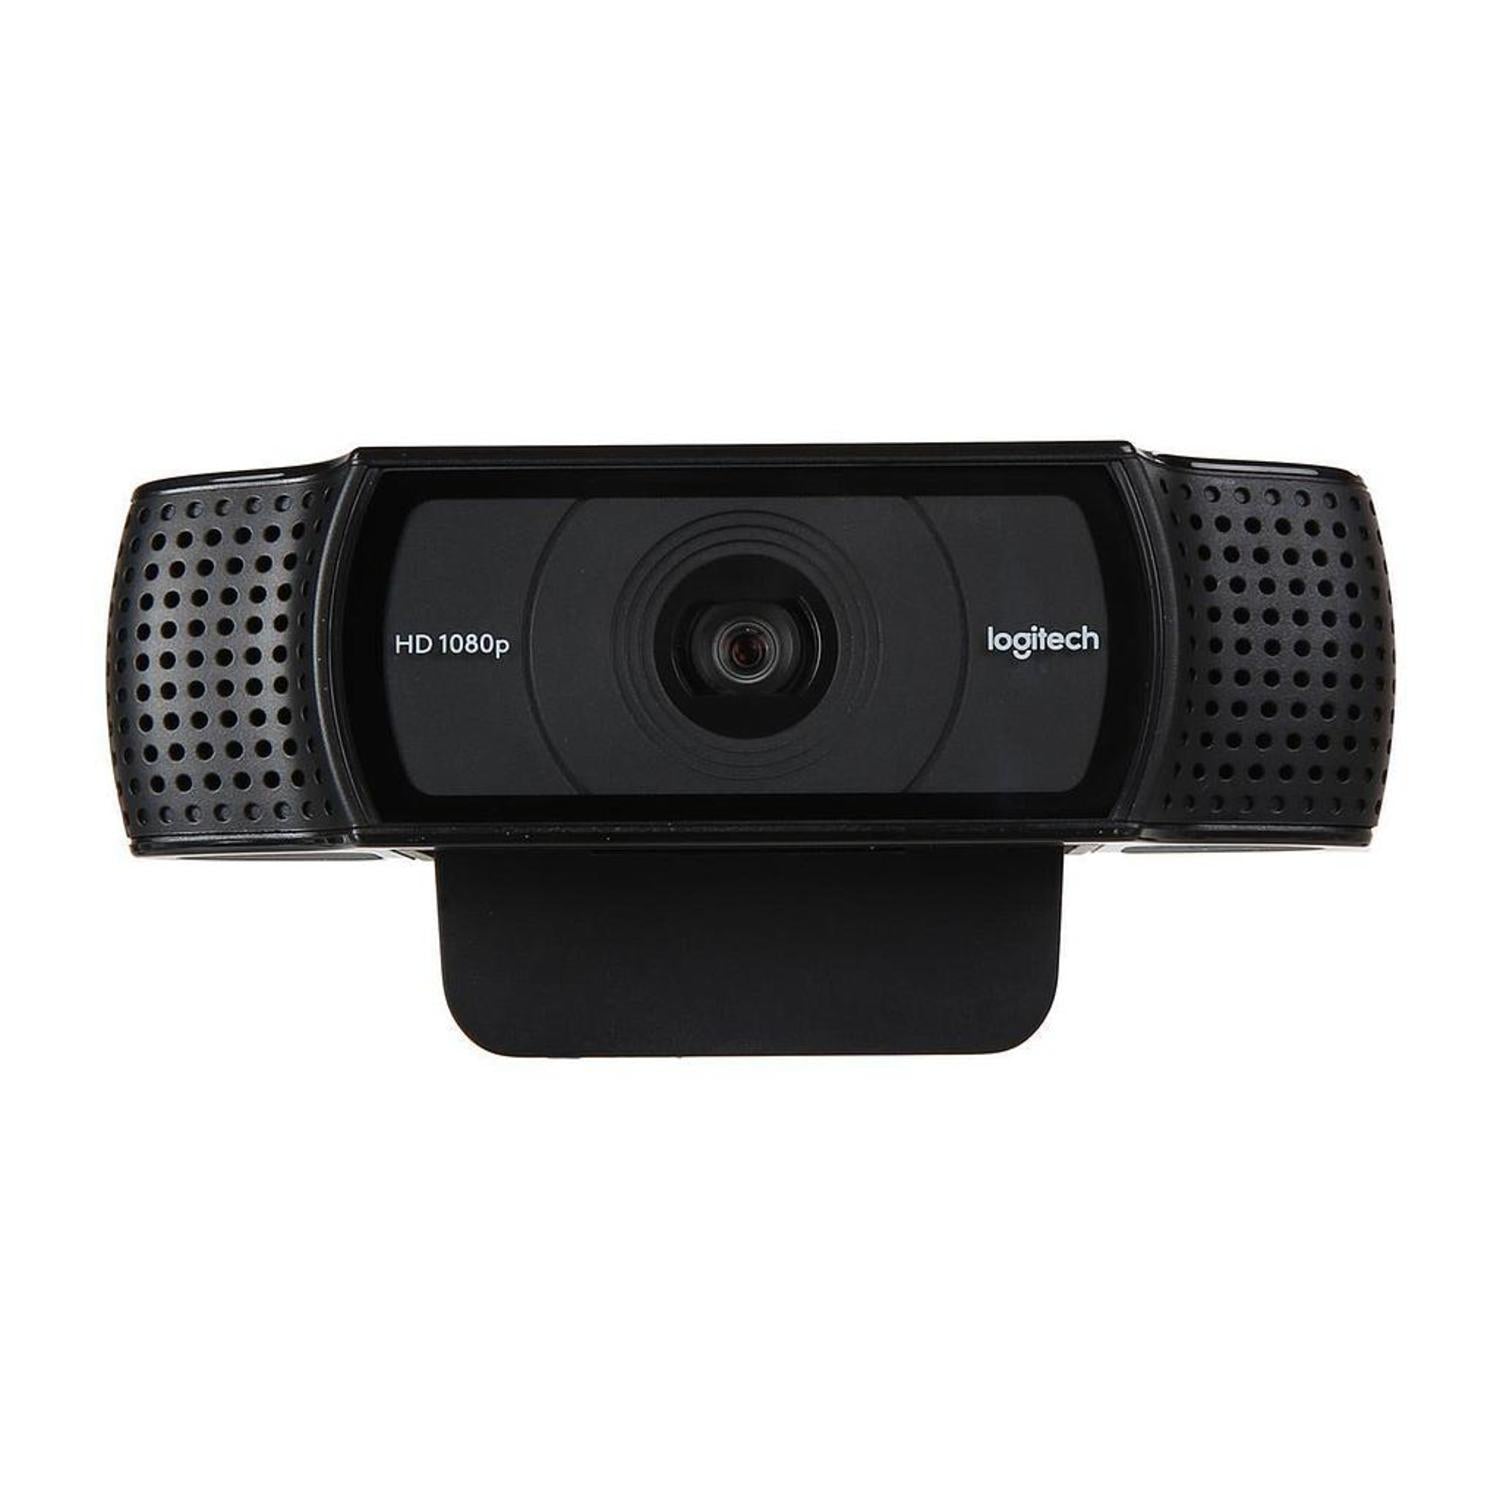 Webcam Logitech C920 Pro Full Hd 1080p 30fps  Logitech C920e Hd 1080p  Webcam - New - Aliexpress